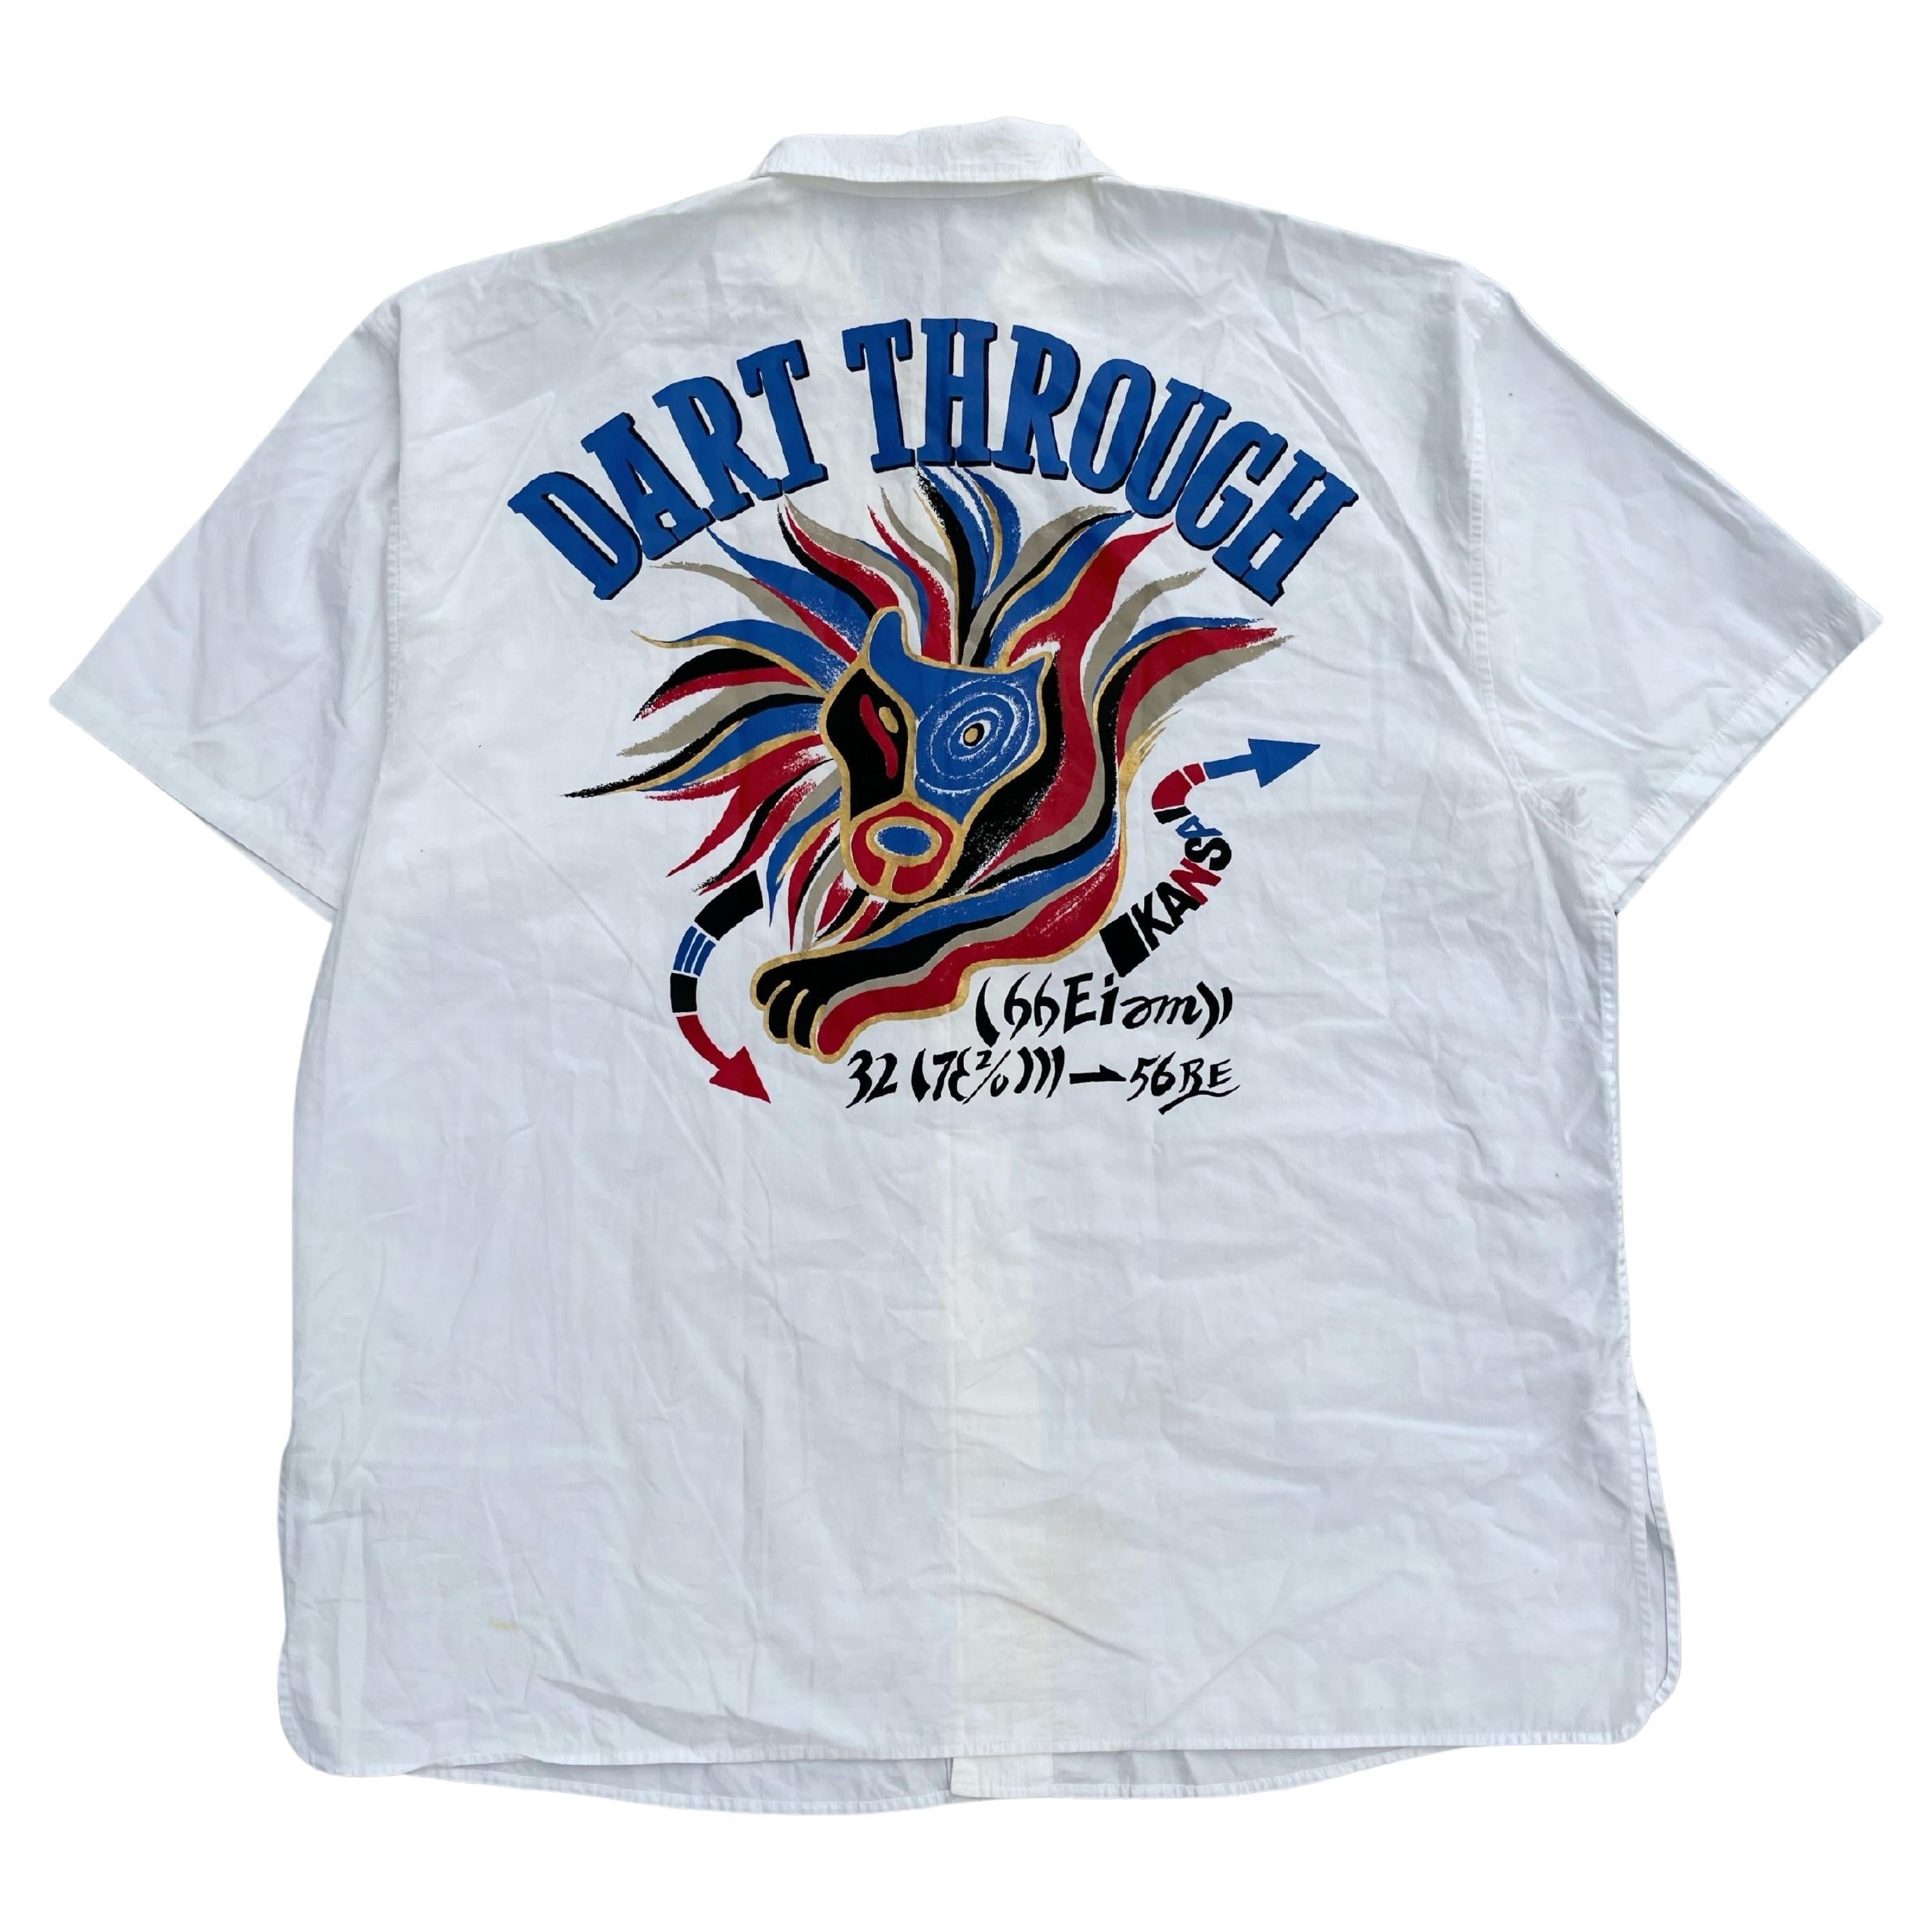 Kansai Yamamoto "Dart Through" Caravan Oversized Shirt, 1980's